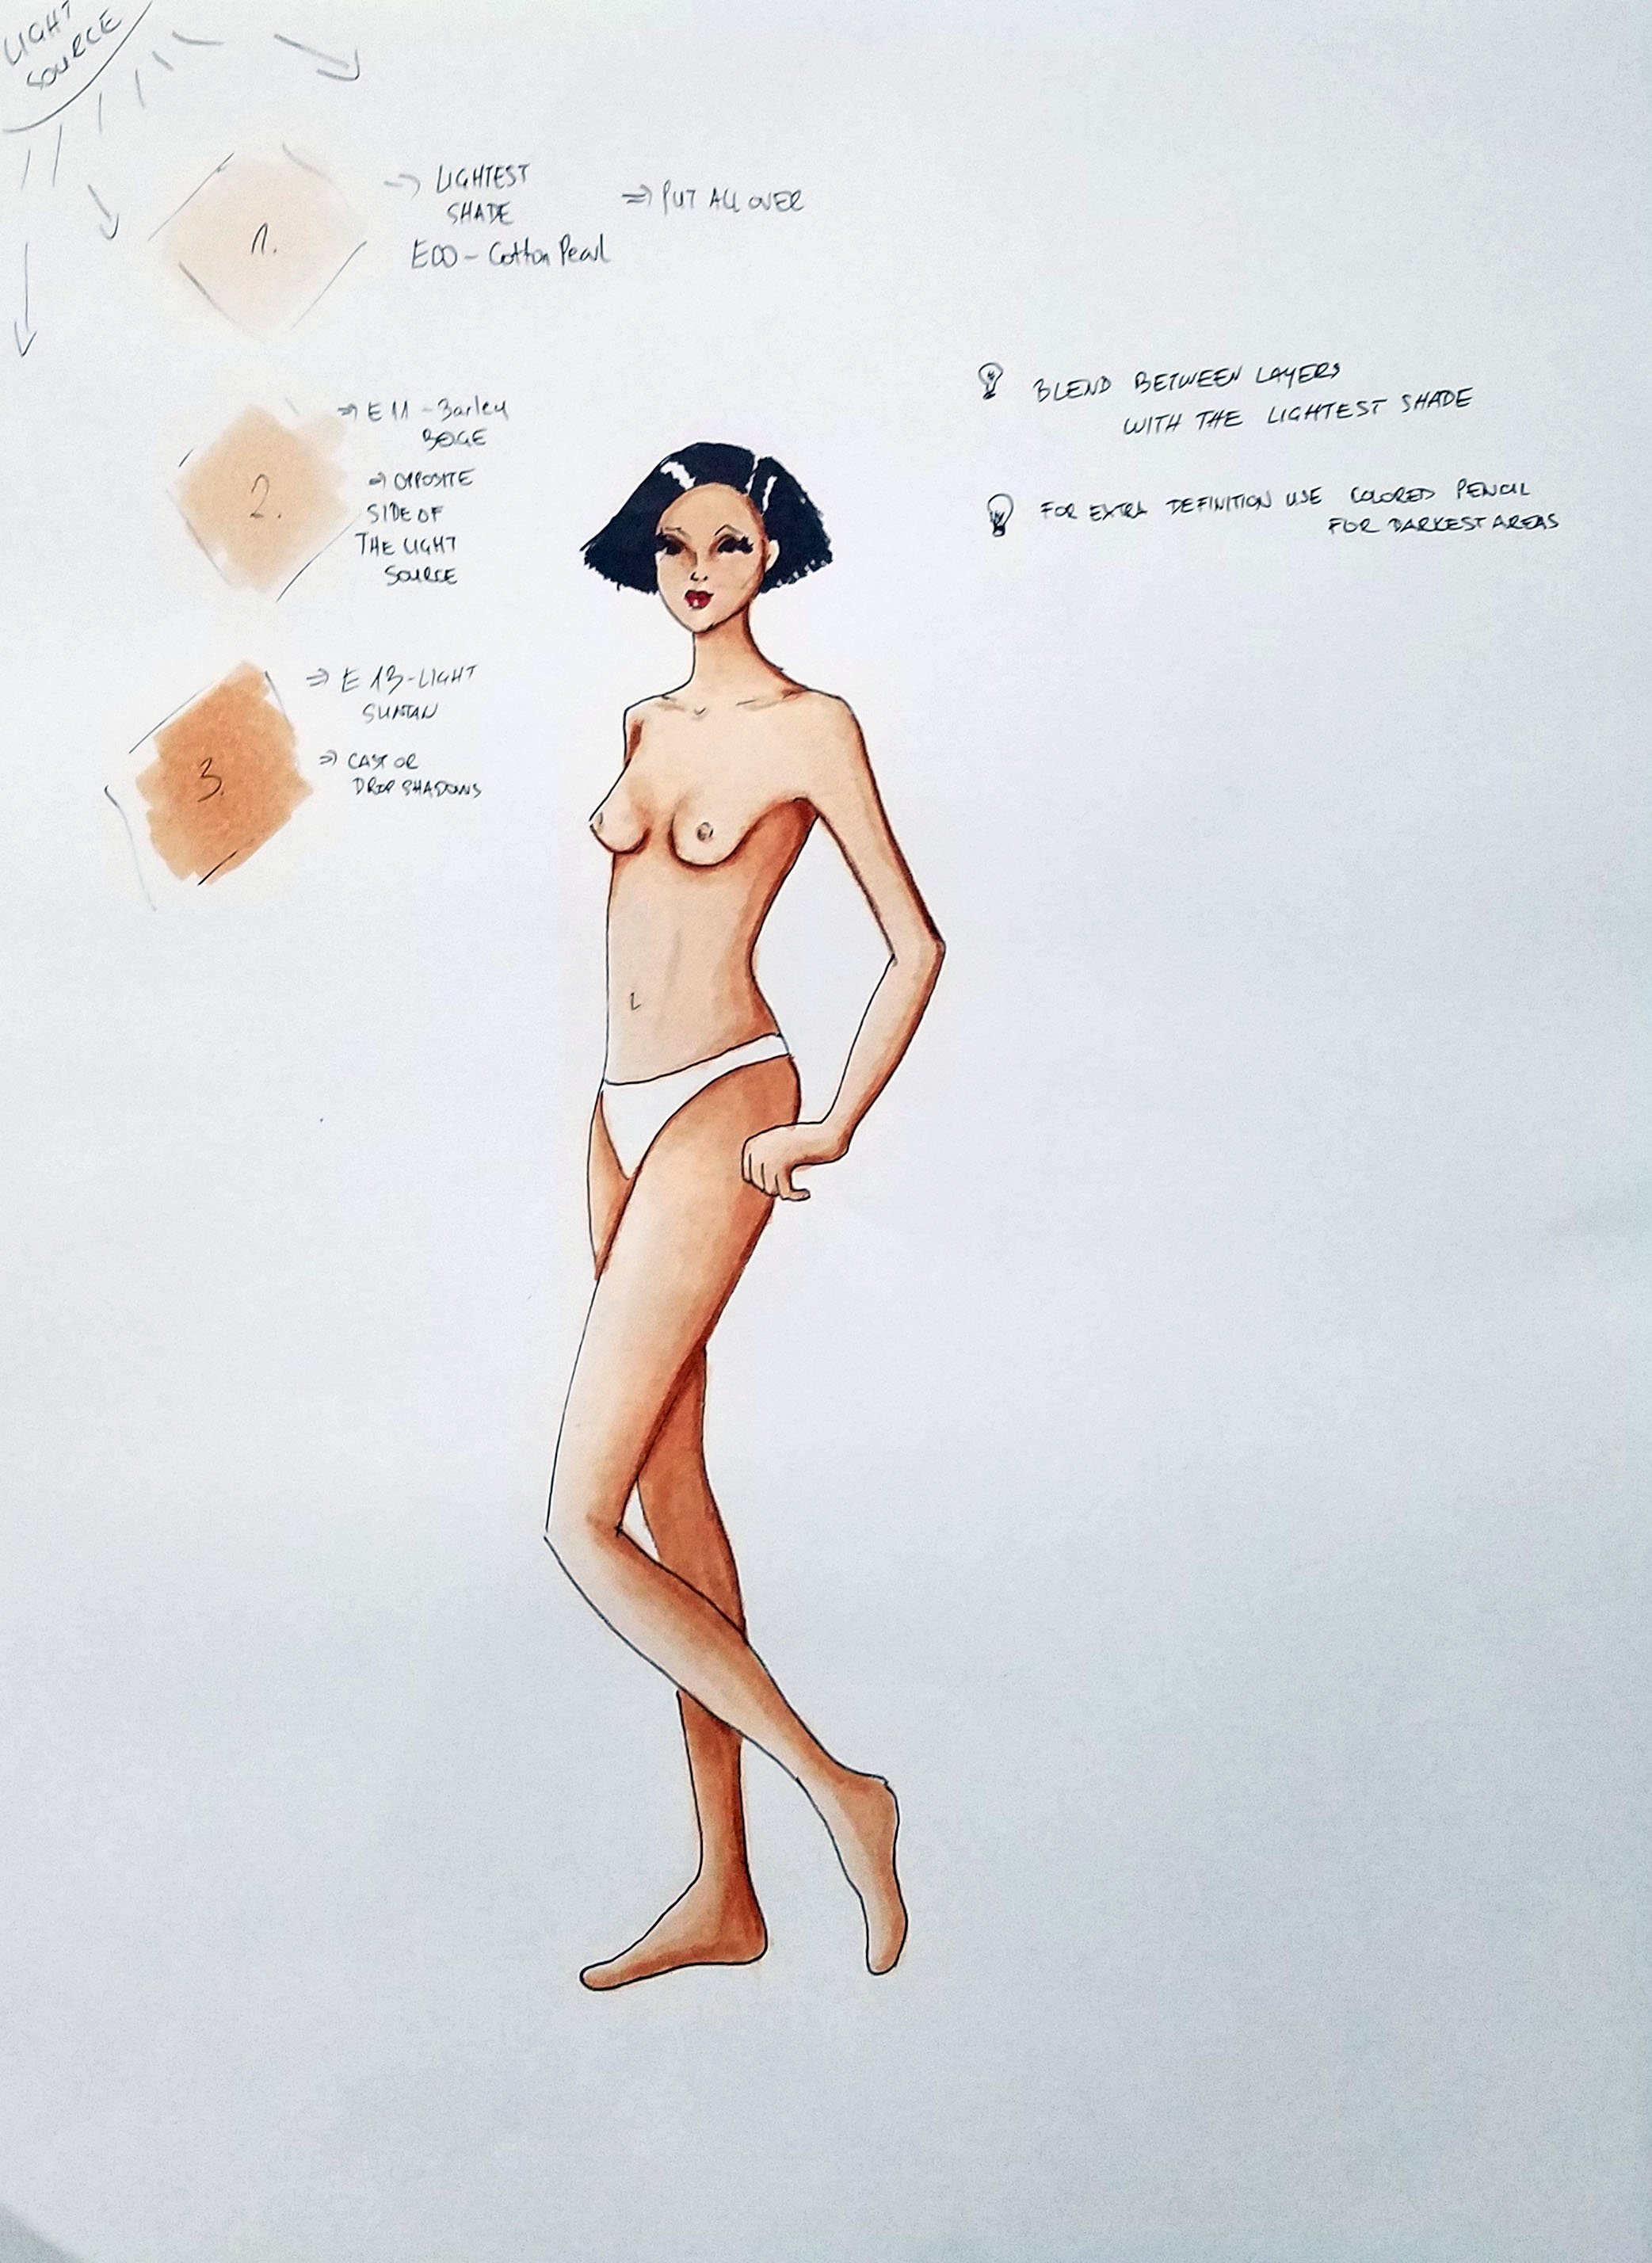 coloring skin tone in fashion illustration